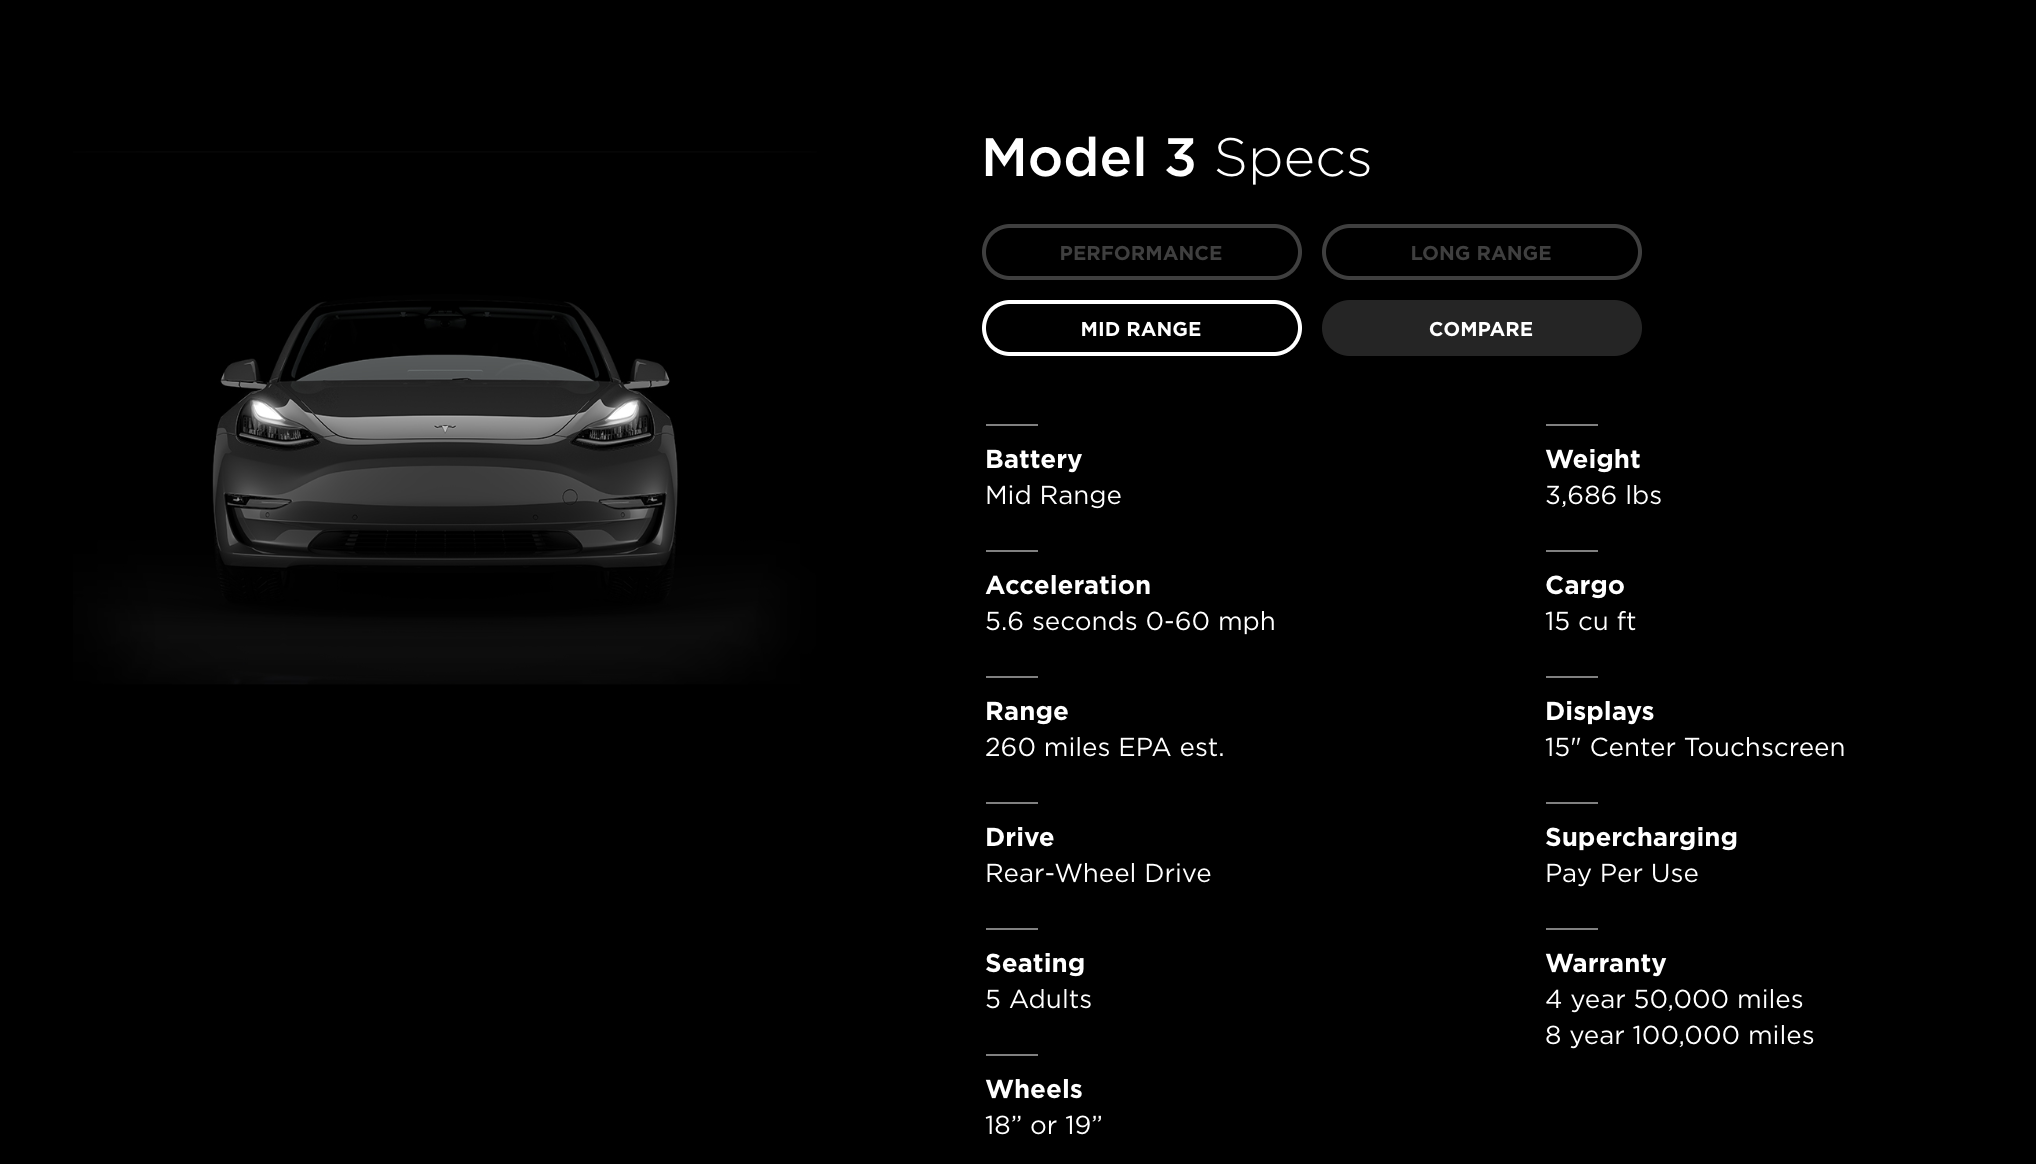 Tesla model 3 mid-range